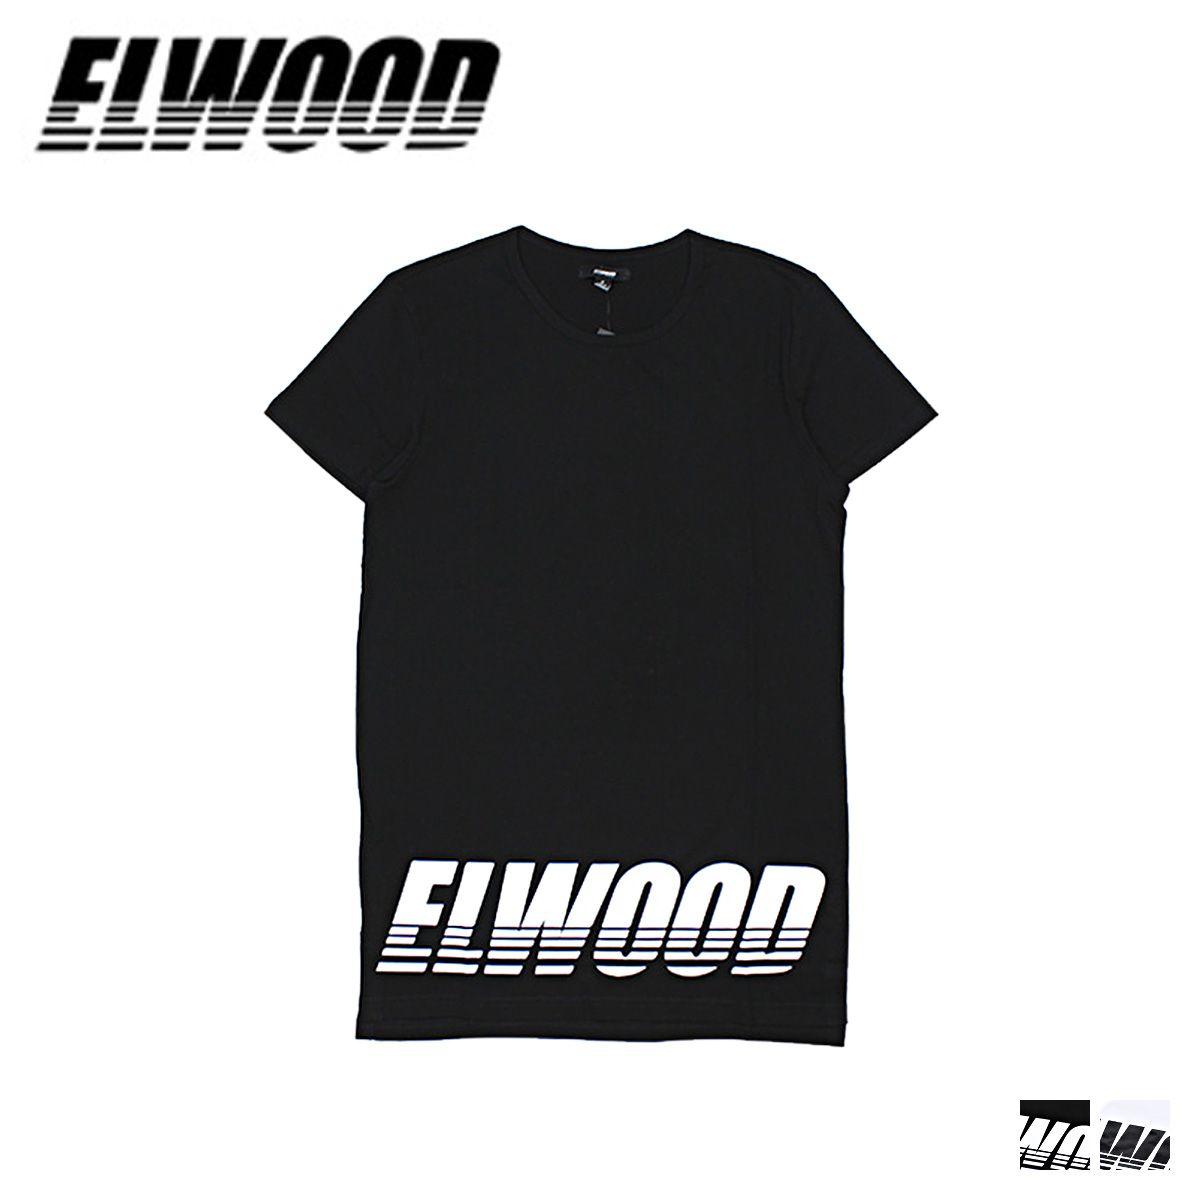 Famous Shirts Logo - Sugar Online Shop: Elwood ELWOOD T shirt short sleeve men's short ...